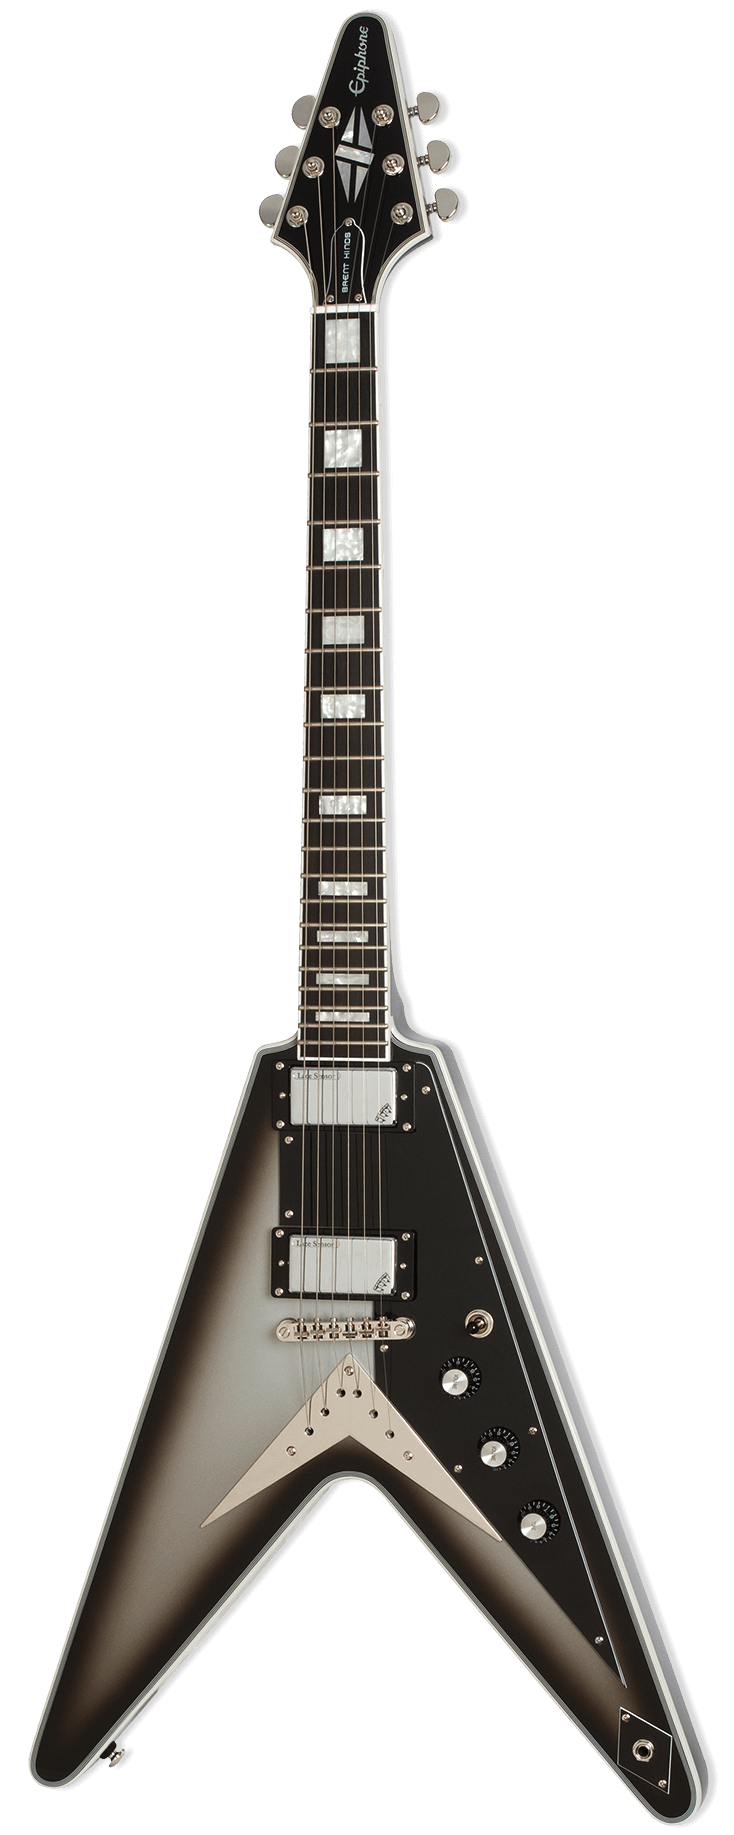 Gibson Metal Rock Guitar Background PNG Image